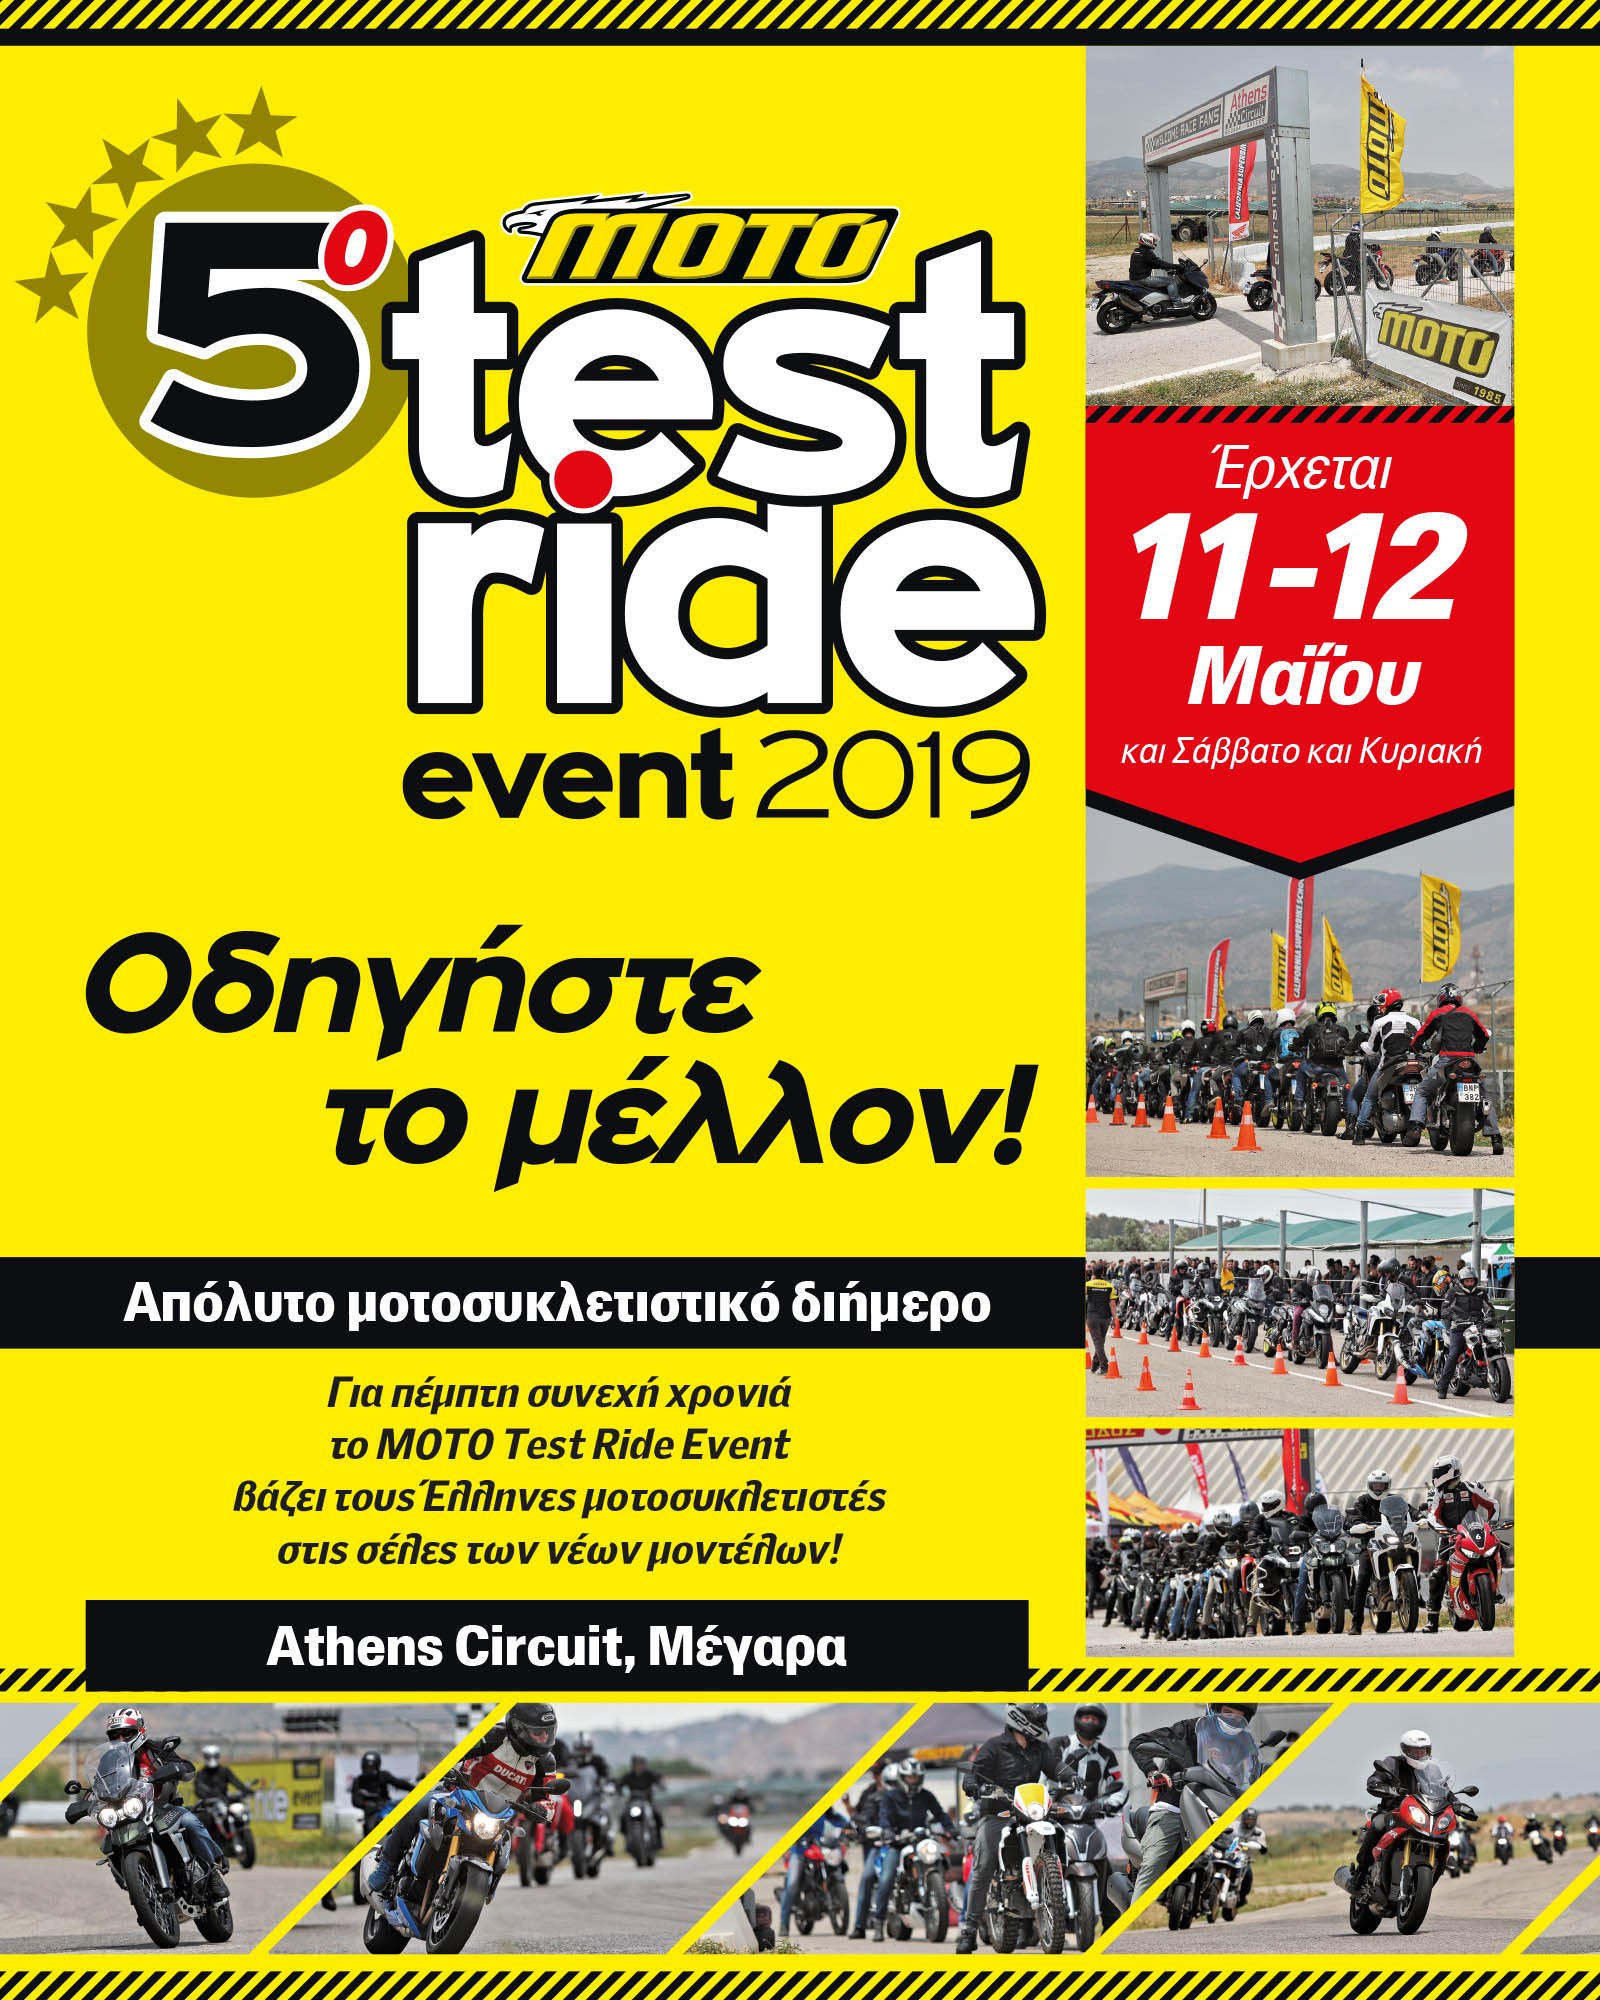 MOTO Magazine: Test Ride Event 2019